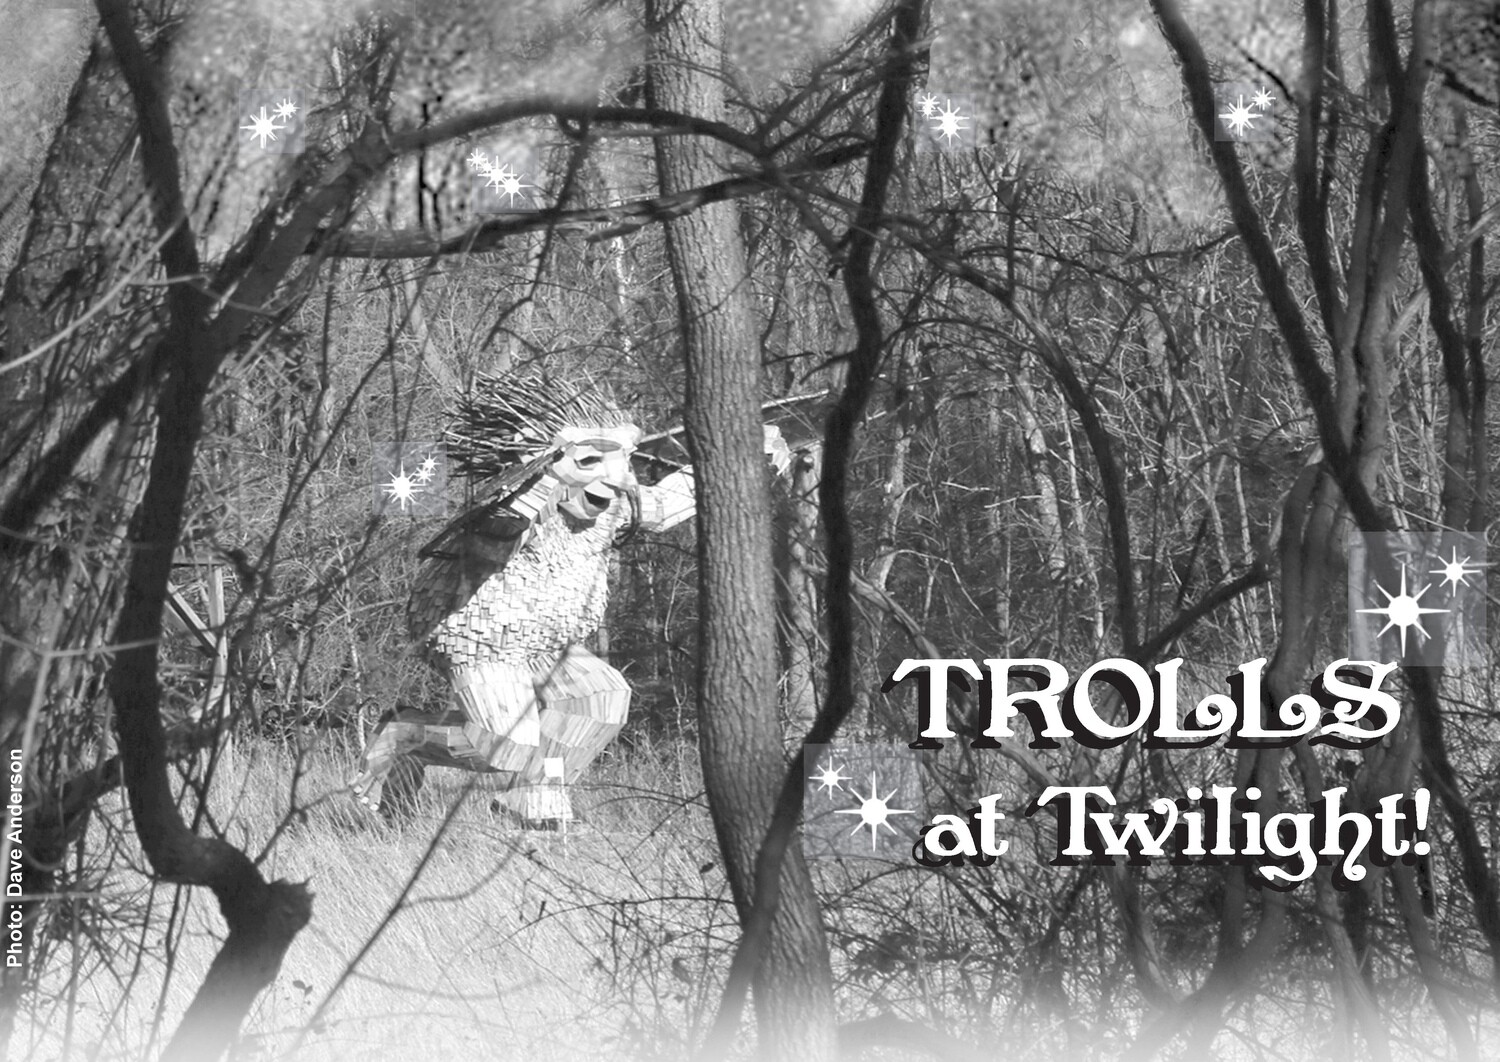 Trolls at Twilight: Saturday September 24, 5:30 – 9:30 p.m. @ Aullwood Farm, 9101 Frederick Pike, Dayton Ohio 45414